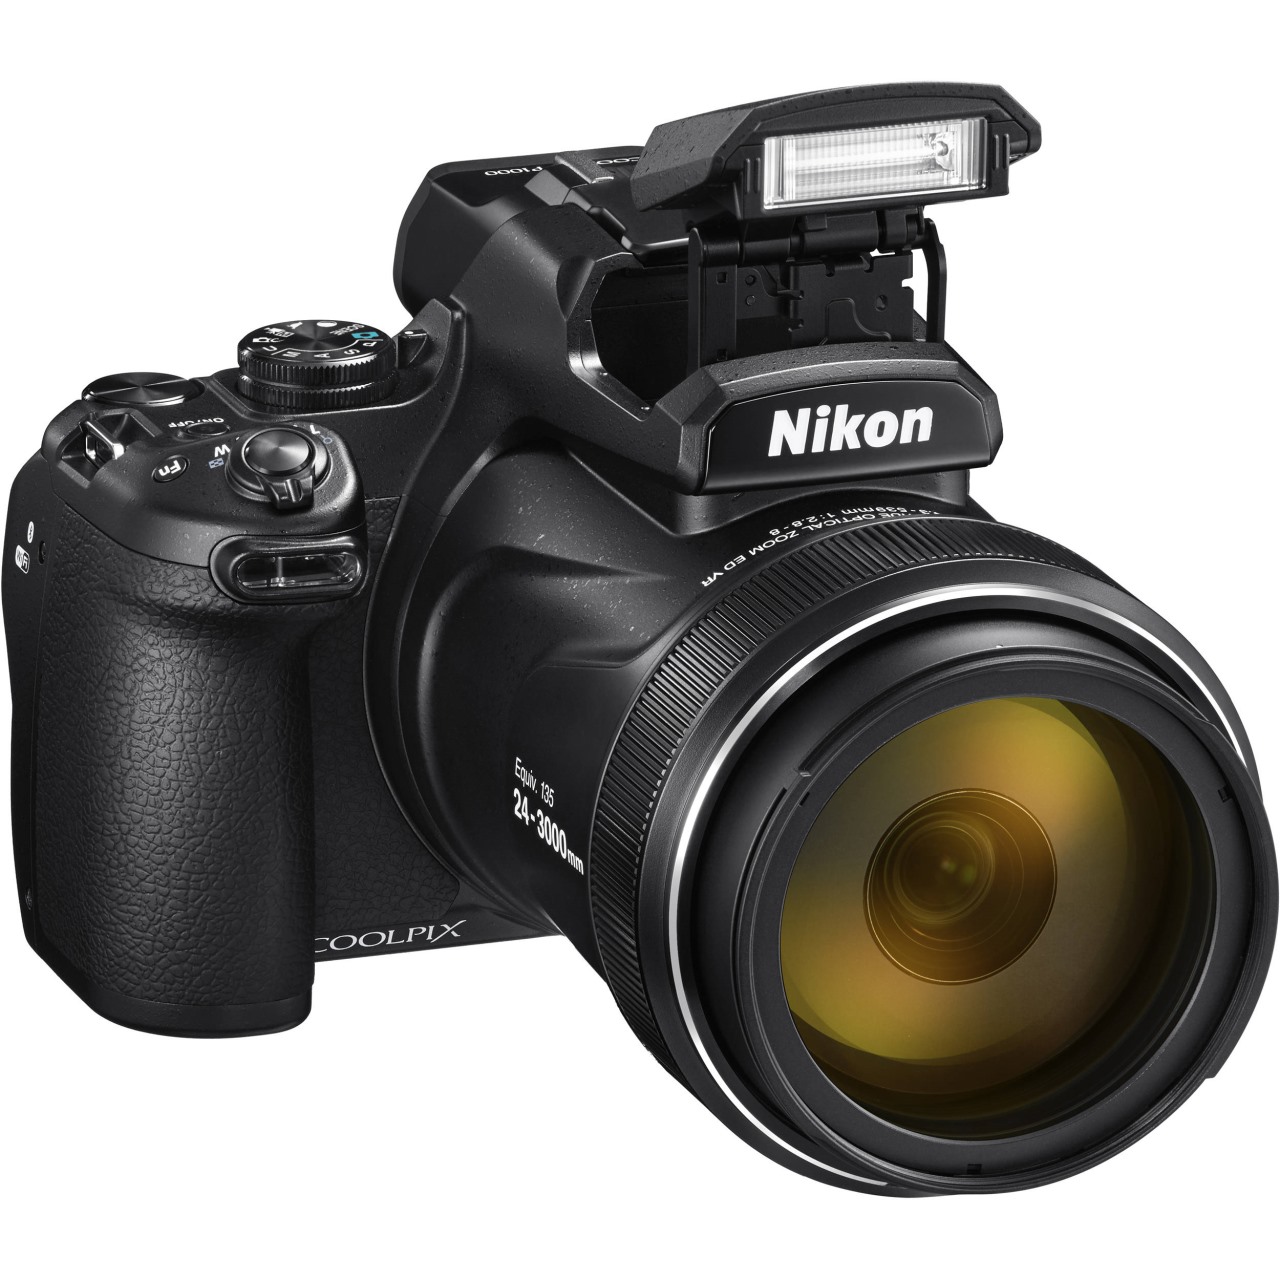 Nikon Coolpix P1000 (set) 